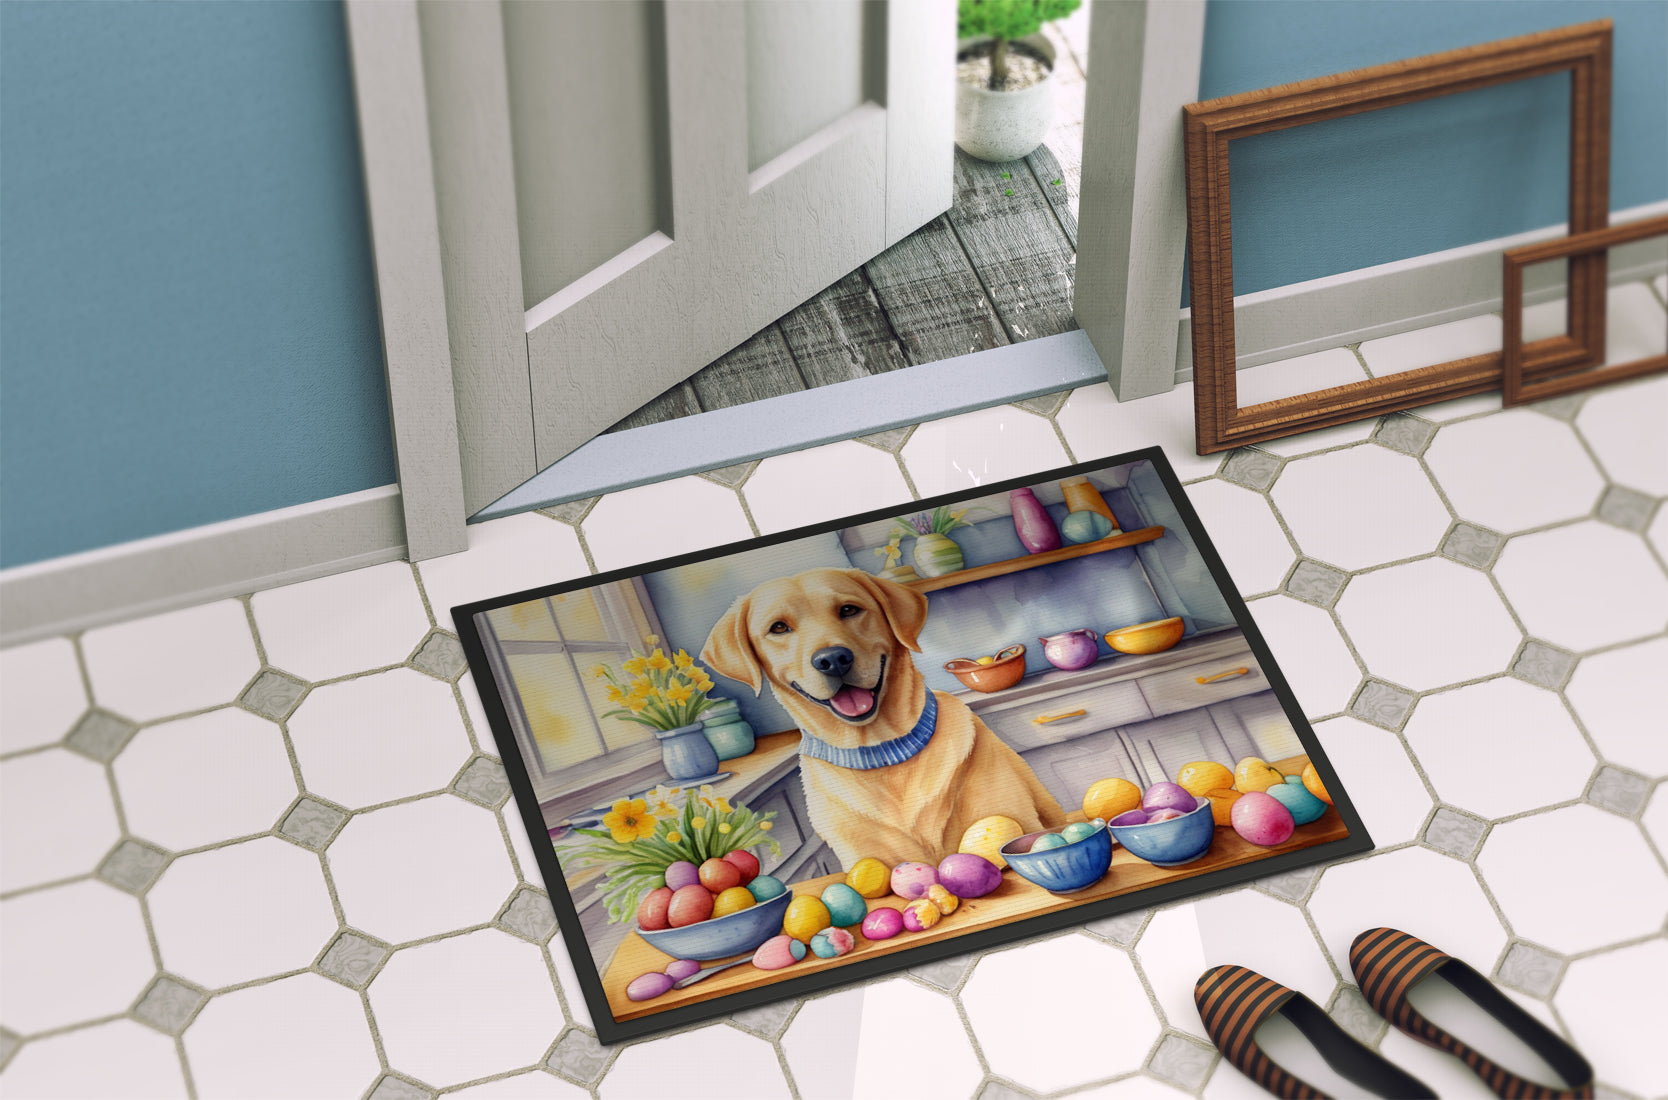 Decorating Easter Yellow Labrador Retriever Doormat